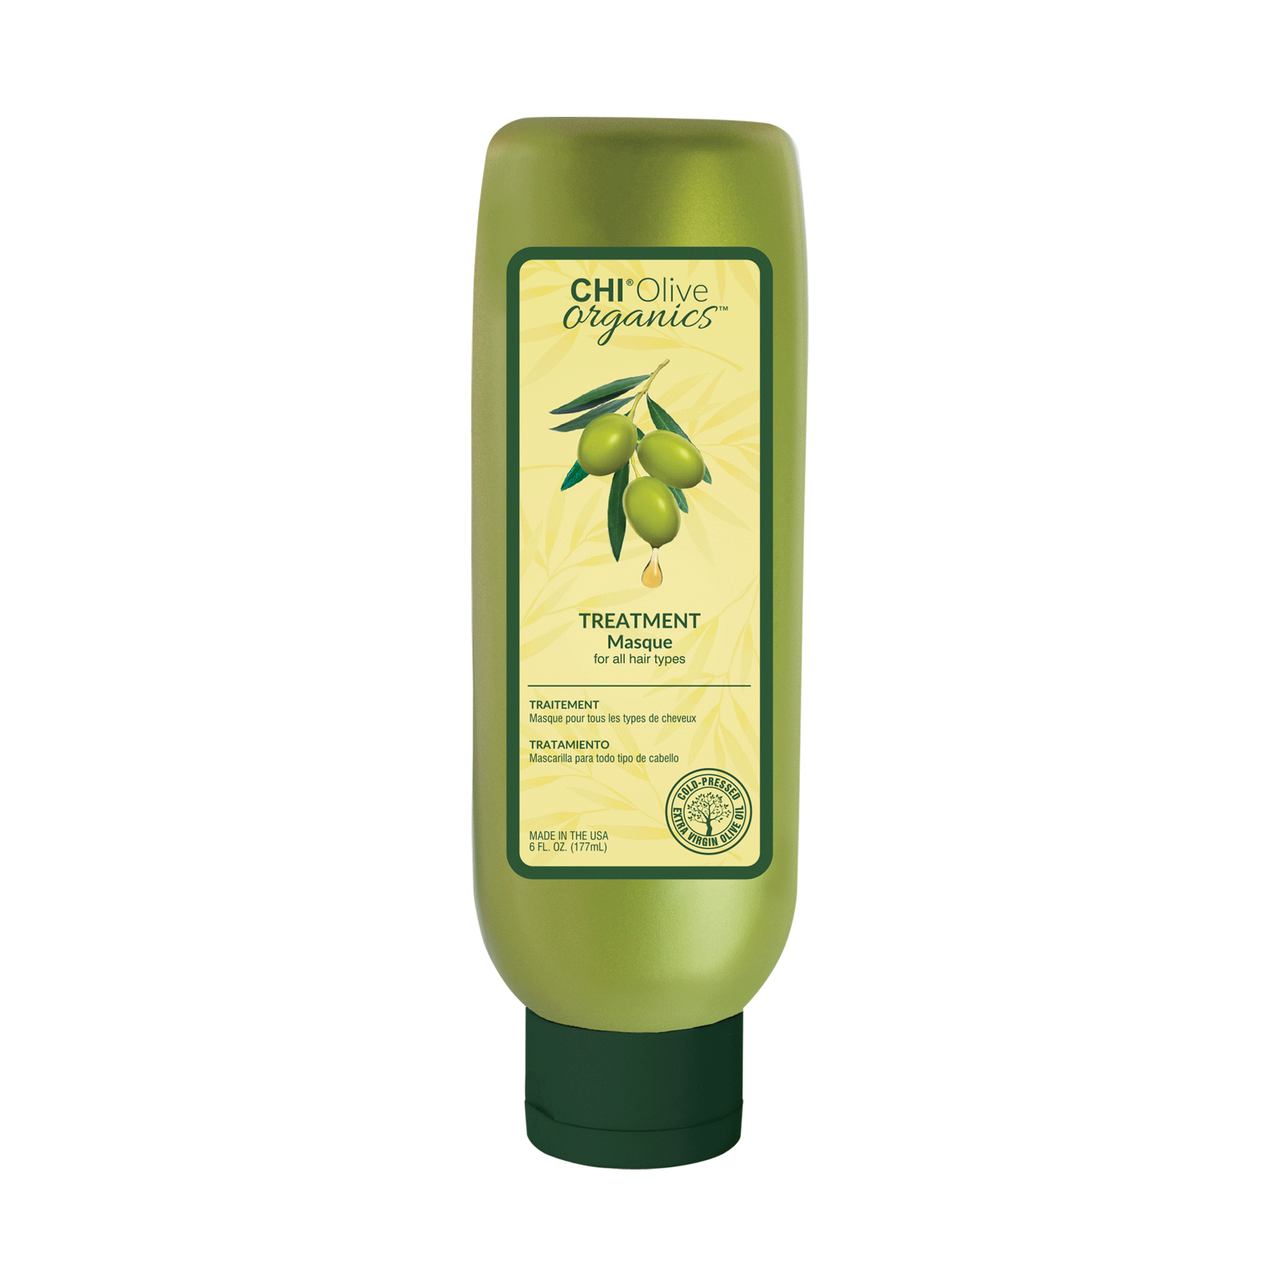 CHI Olive Organics Treatment Masque 6oz - $28.00